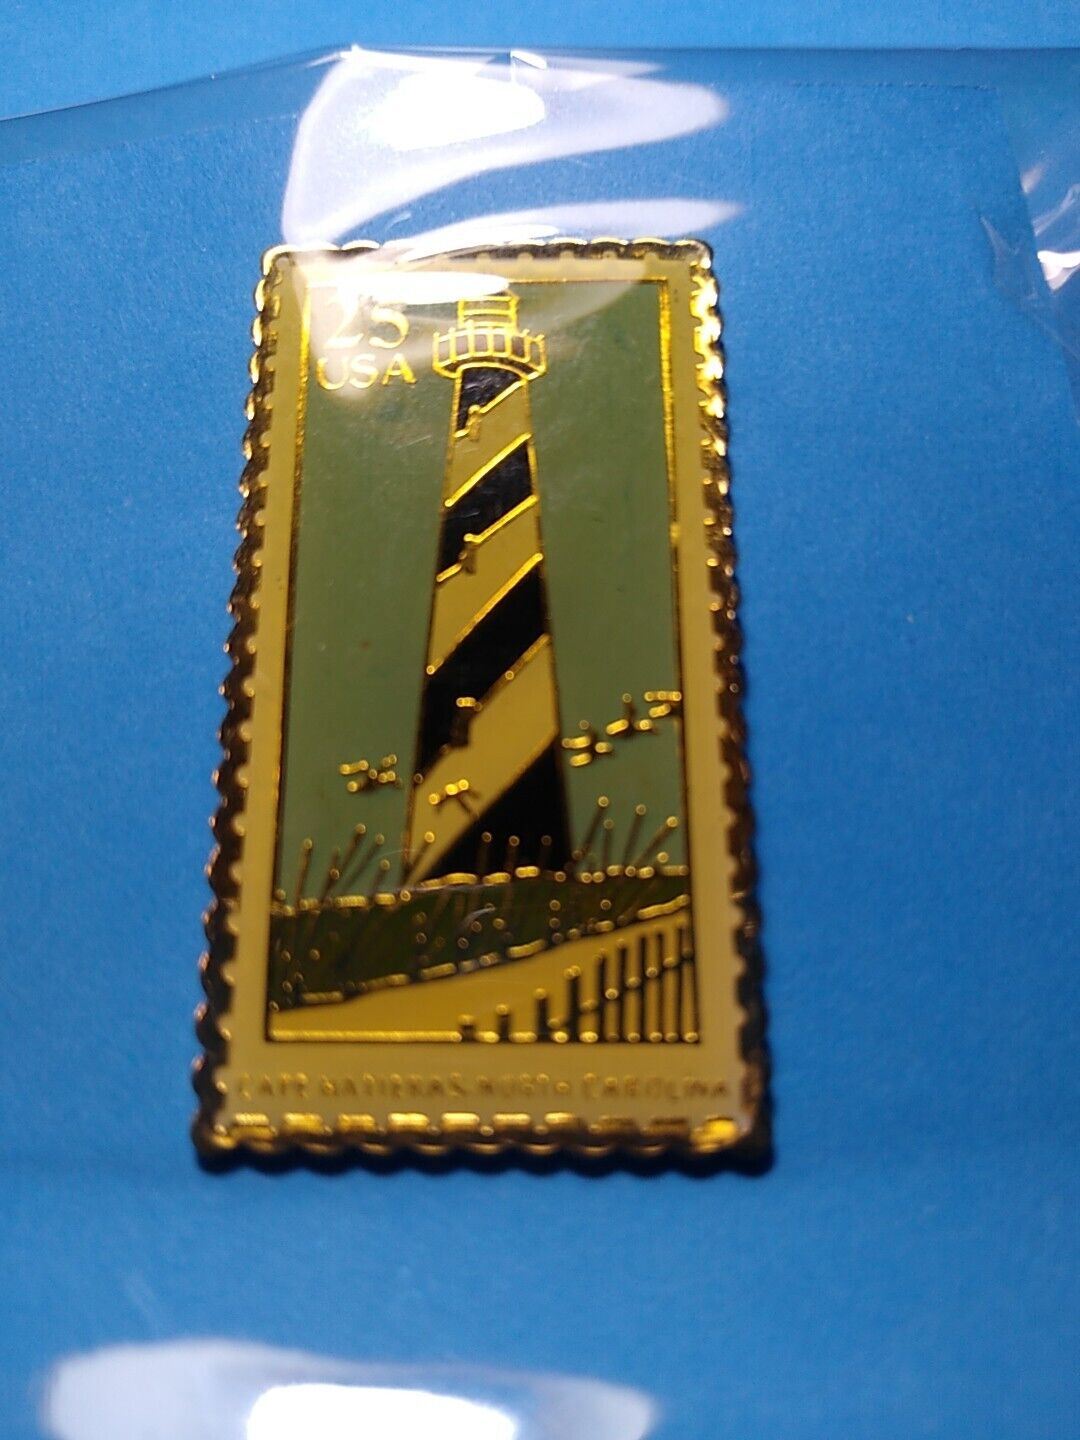 Vintage USPS Lapel pin 